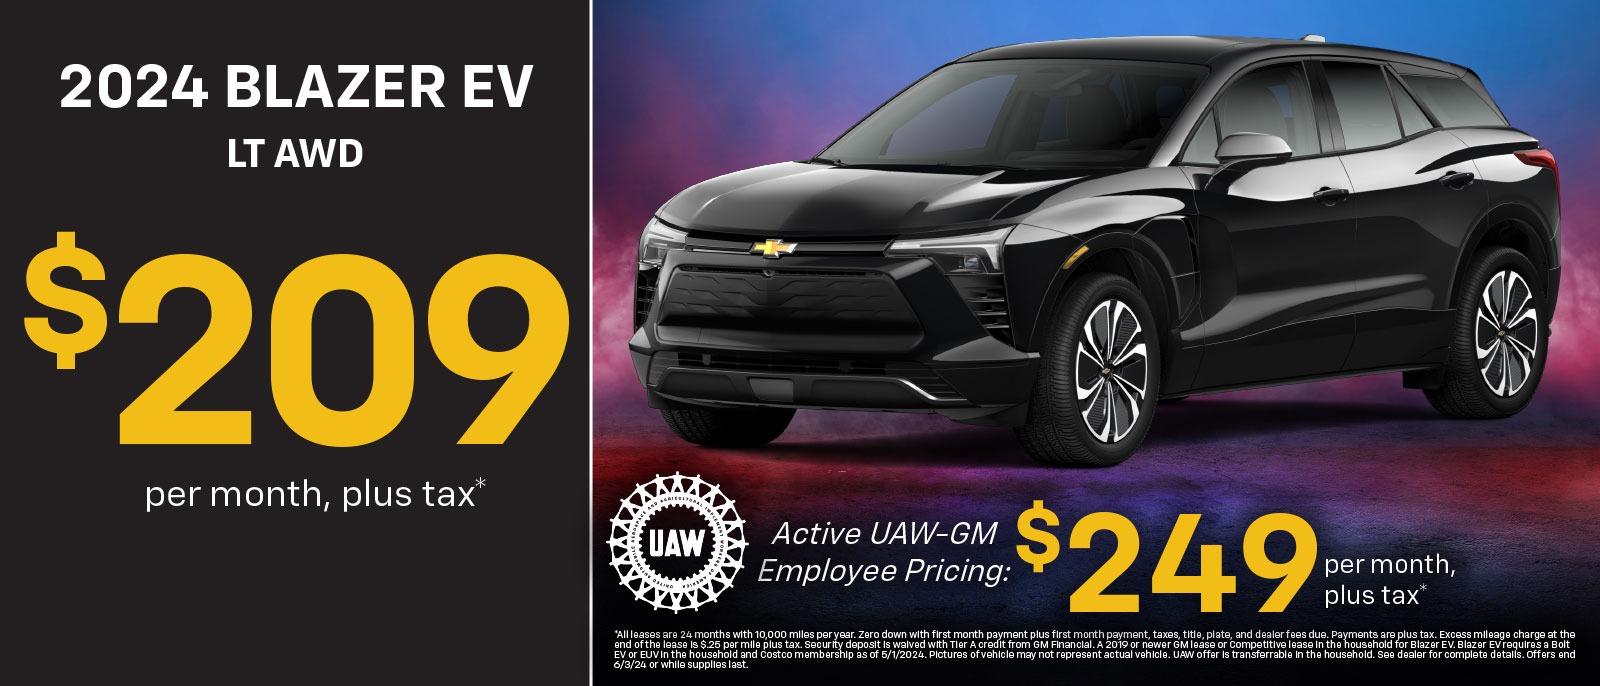 2024 Blazer EV LT AWD
$209 per month, plus tax*
Active UAW-GM Employee Pricing: $249 per month plus tax*